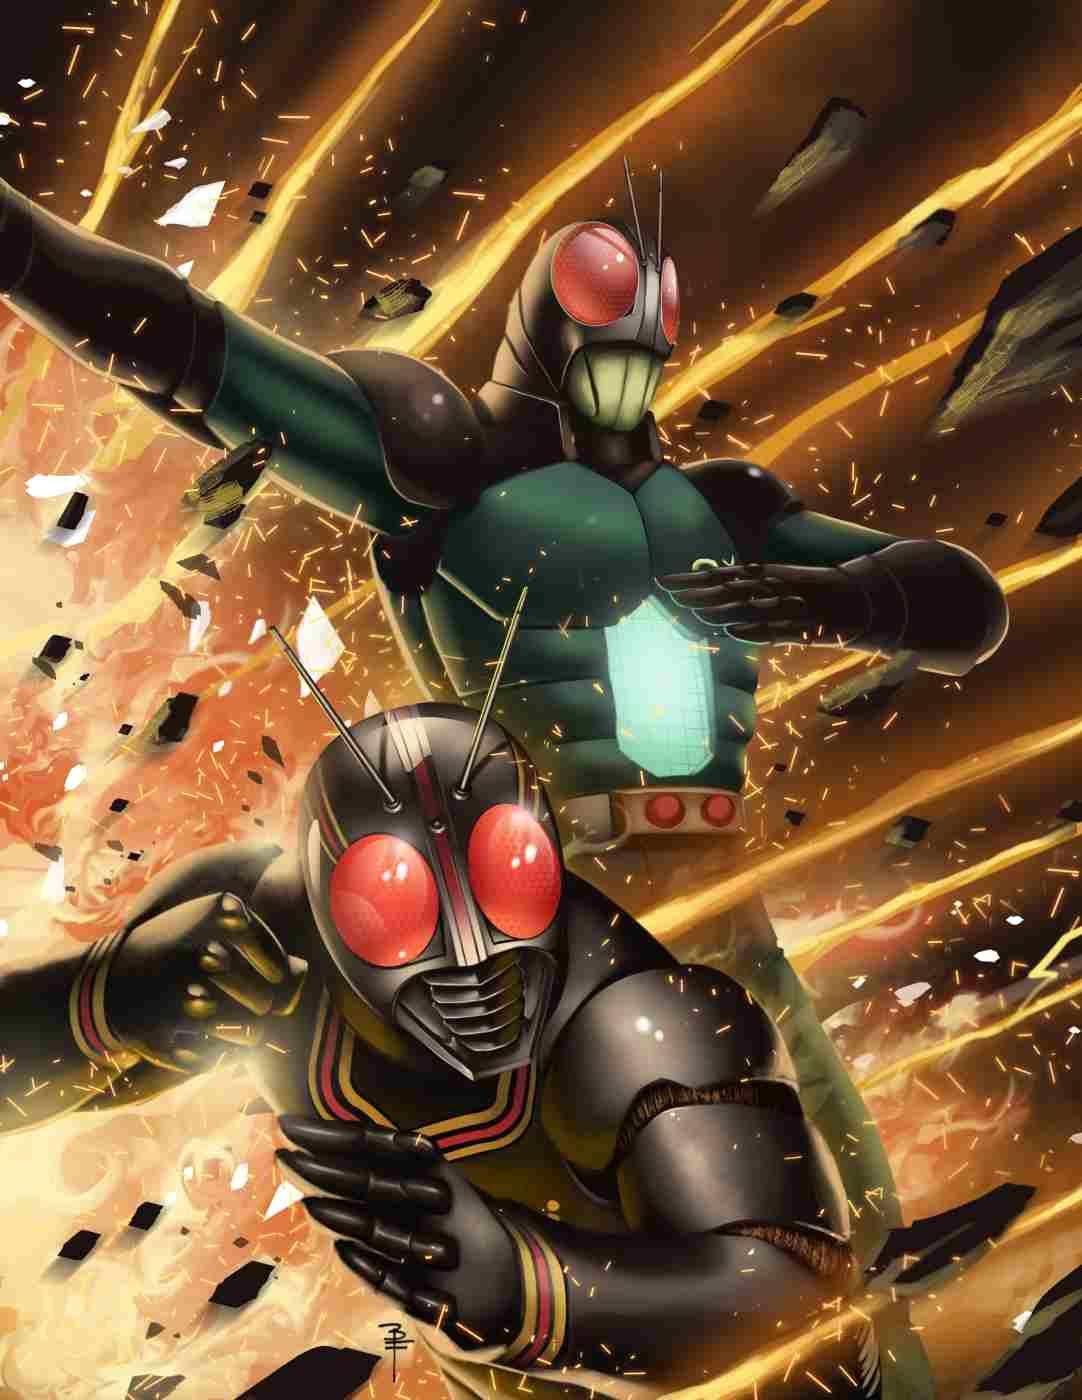 Kotaro Minami as Kamen Rider Black and Kamen Rider Black RX